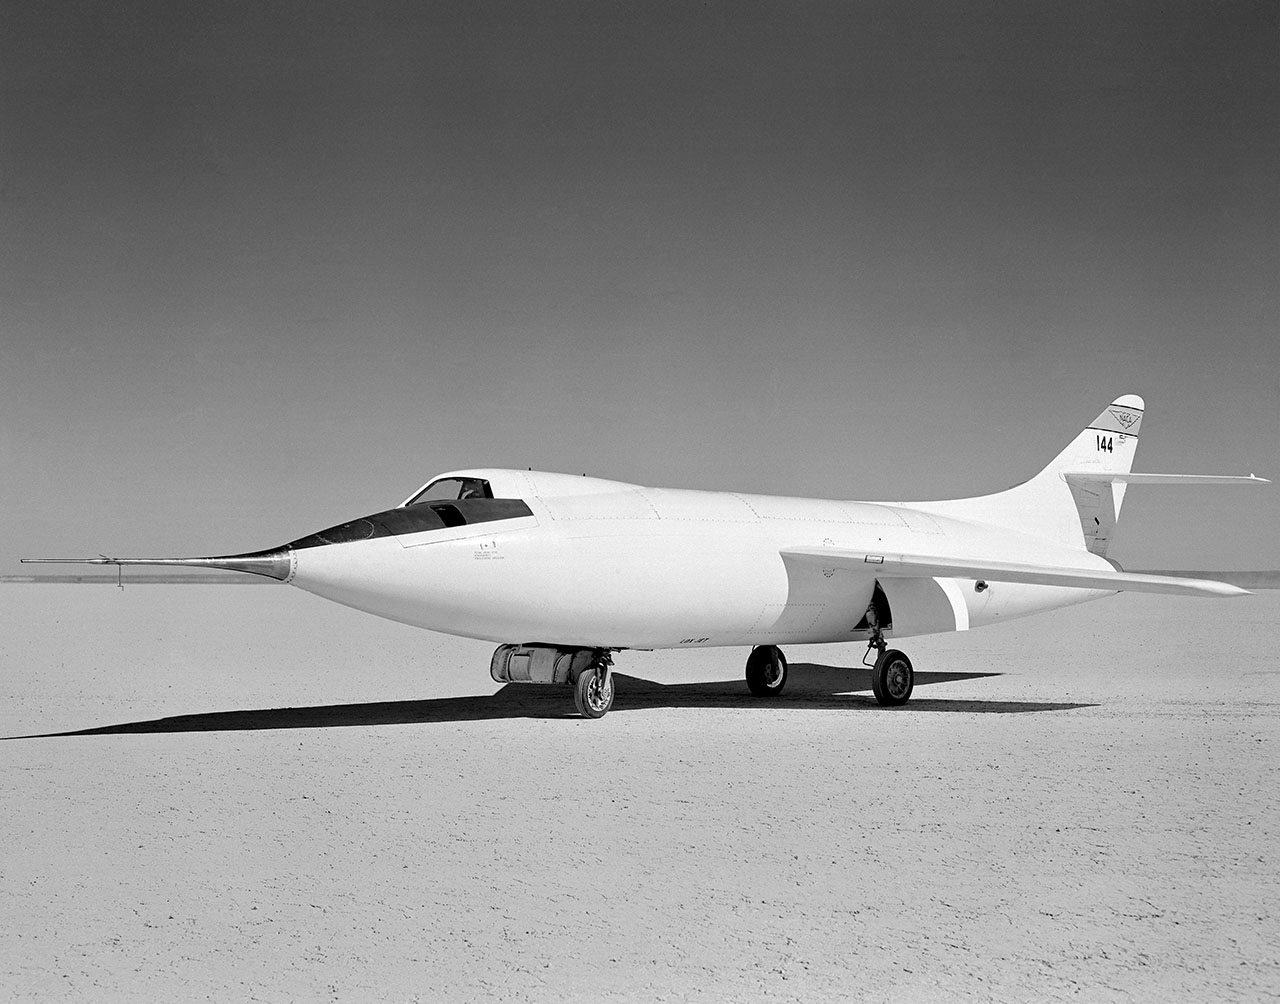 6. Second supersonic plane model